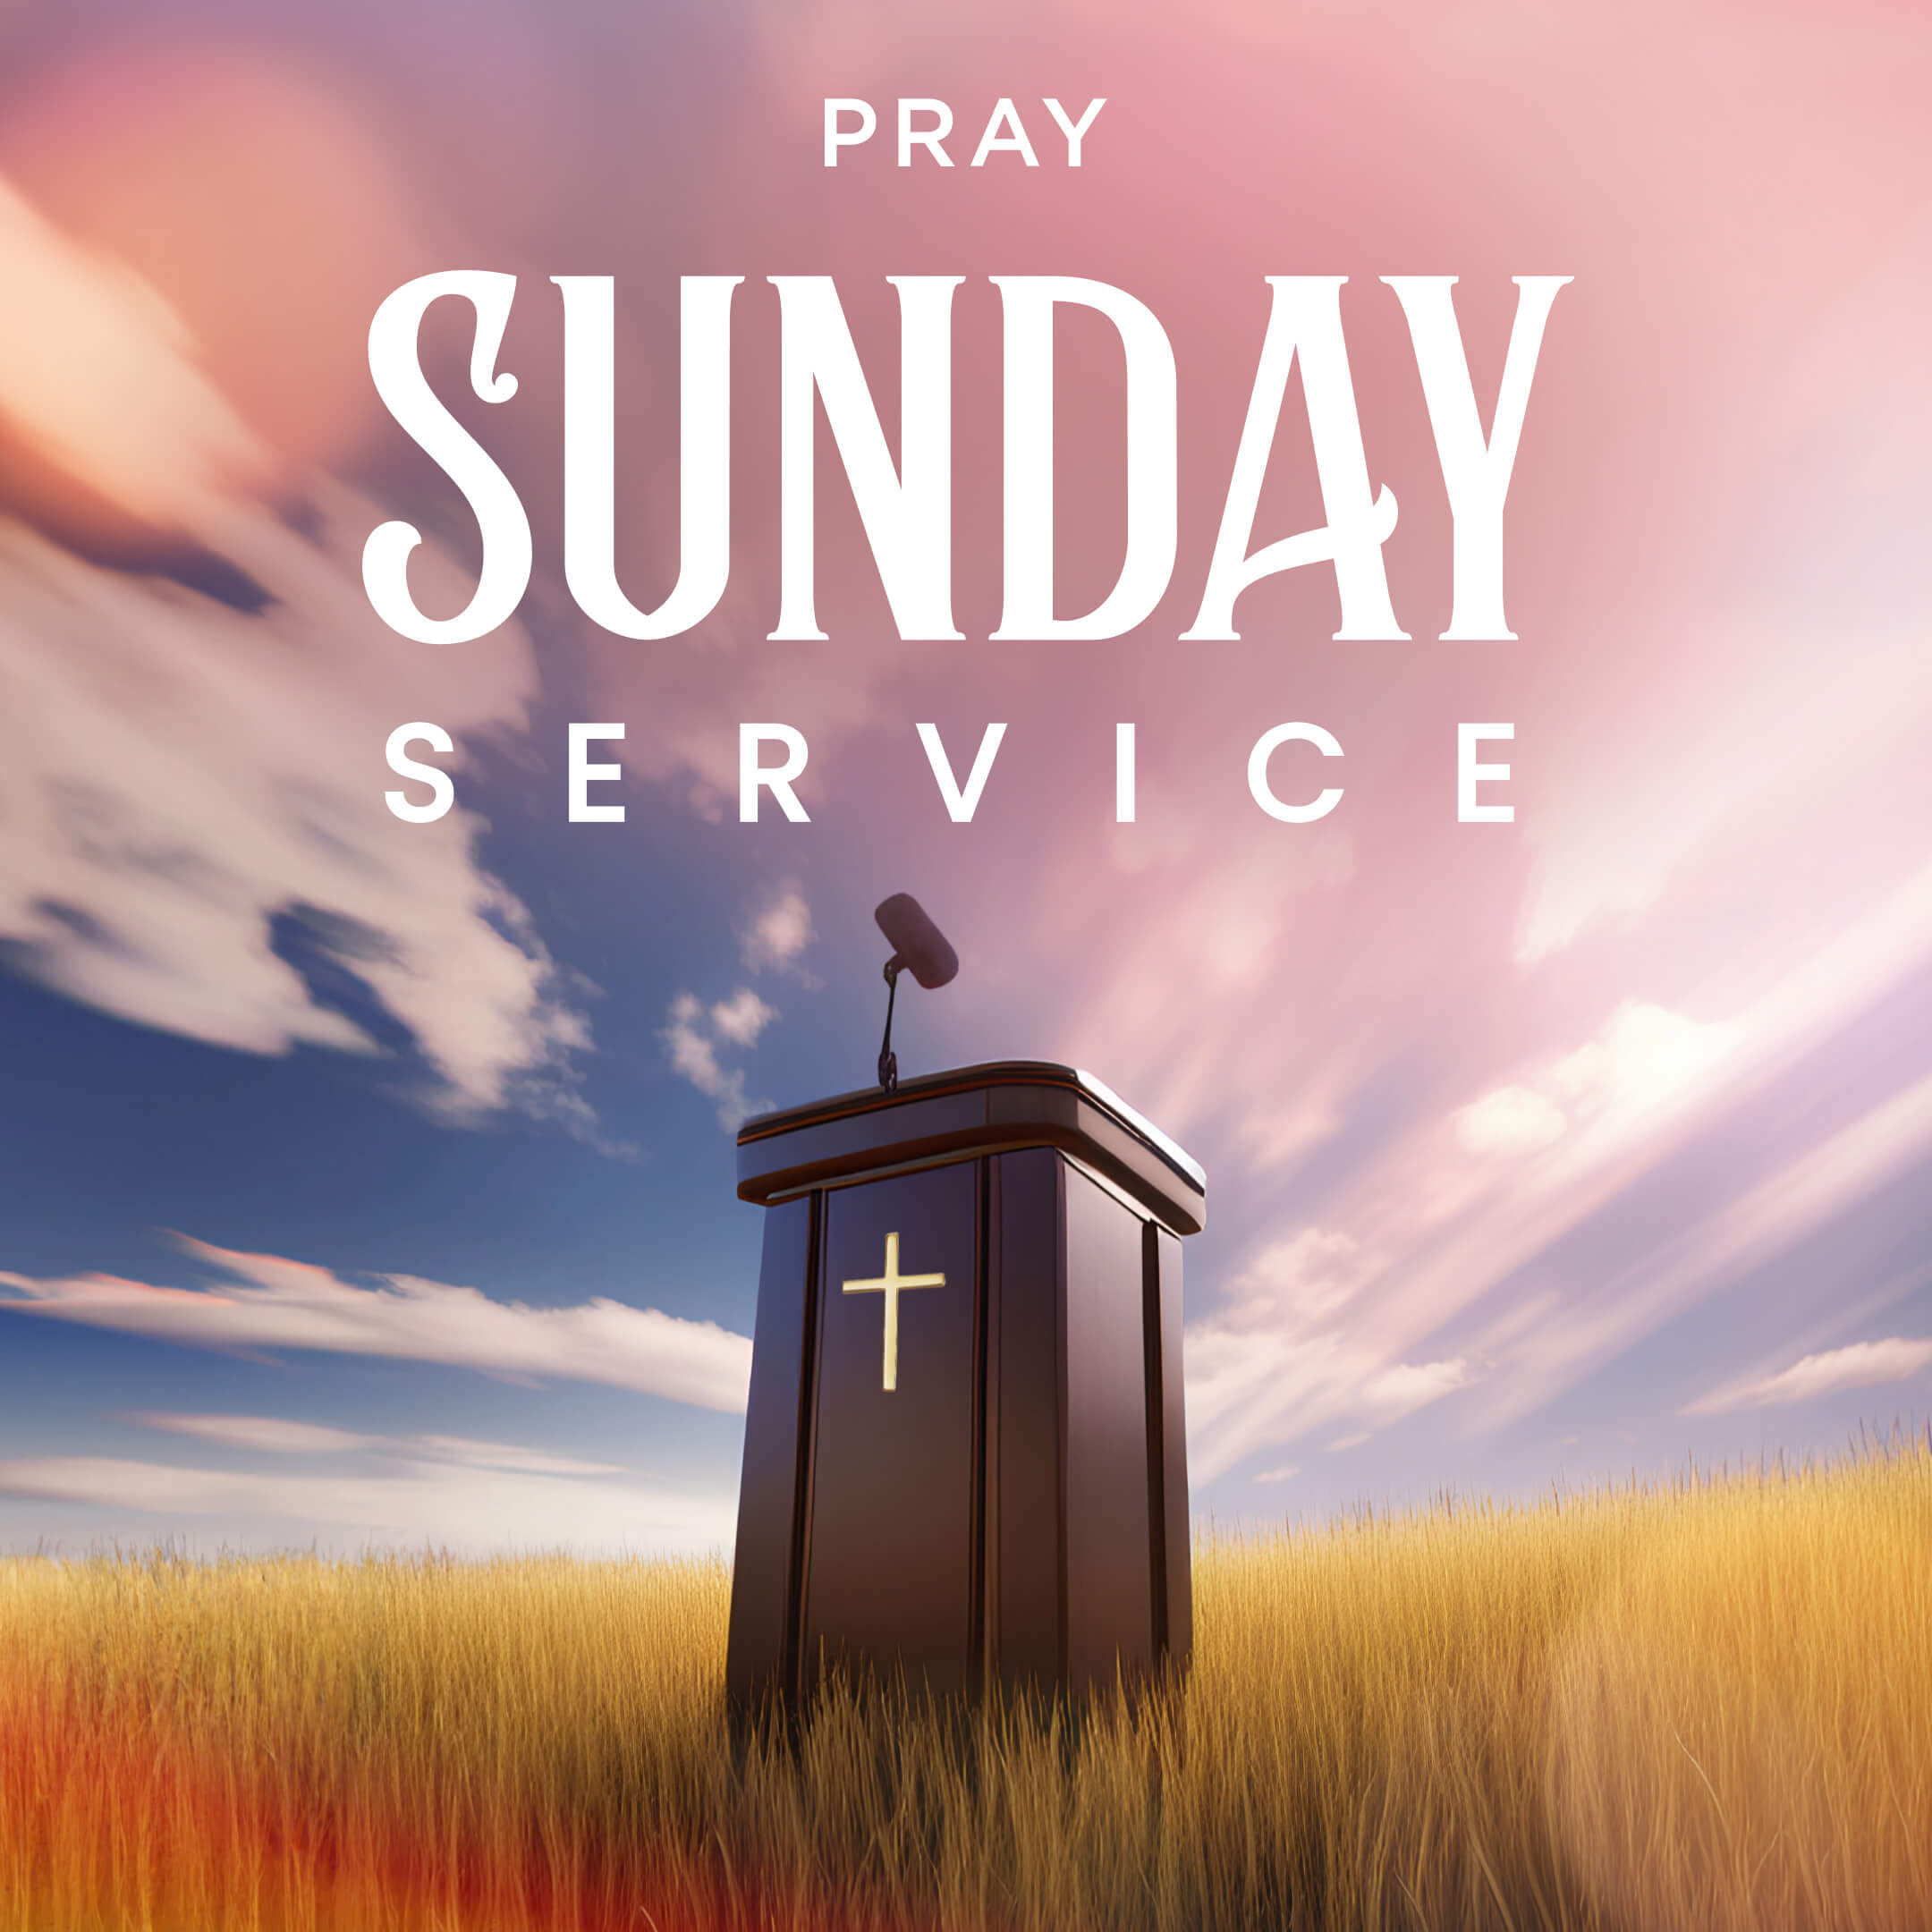 Rick Warren on Sunday Service